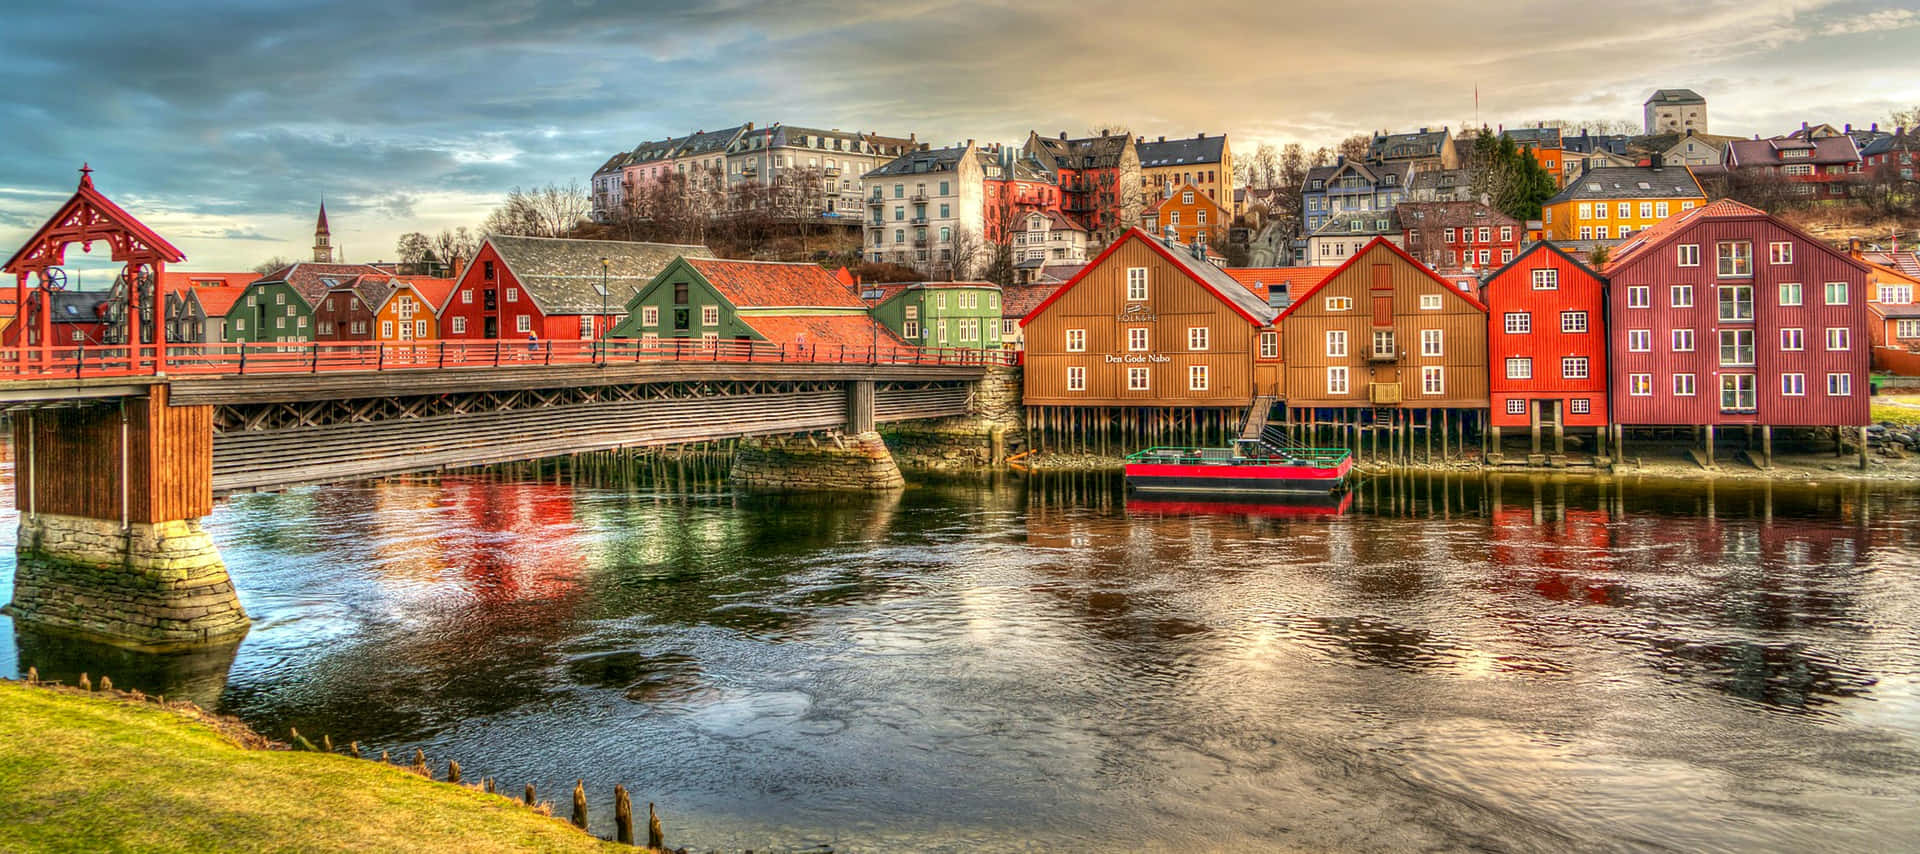 Trondheim Old Town Bridgeand Riverfront Wallpaper